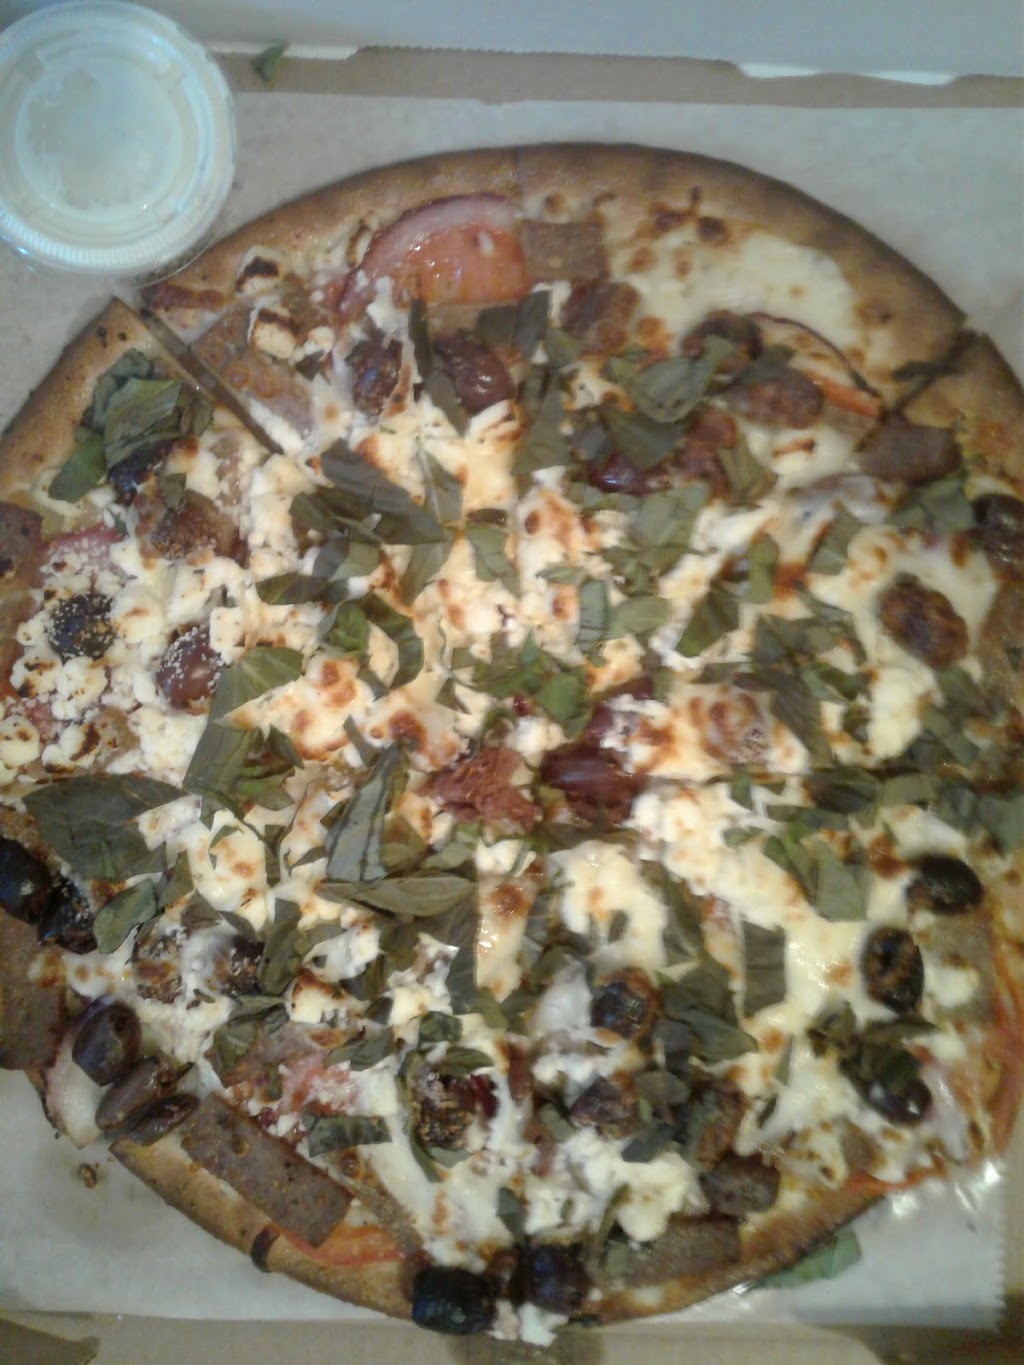 Pizza DeCasa | 101 Fern Hollow Rd, Coraopolis, PA 15108, USA | Phone: (412) 262-2272